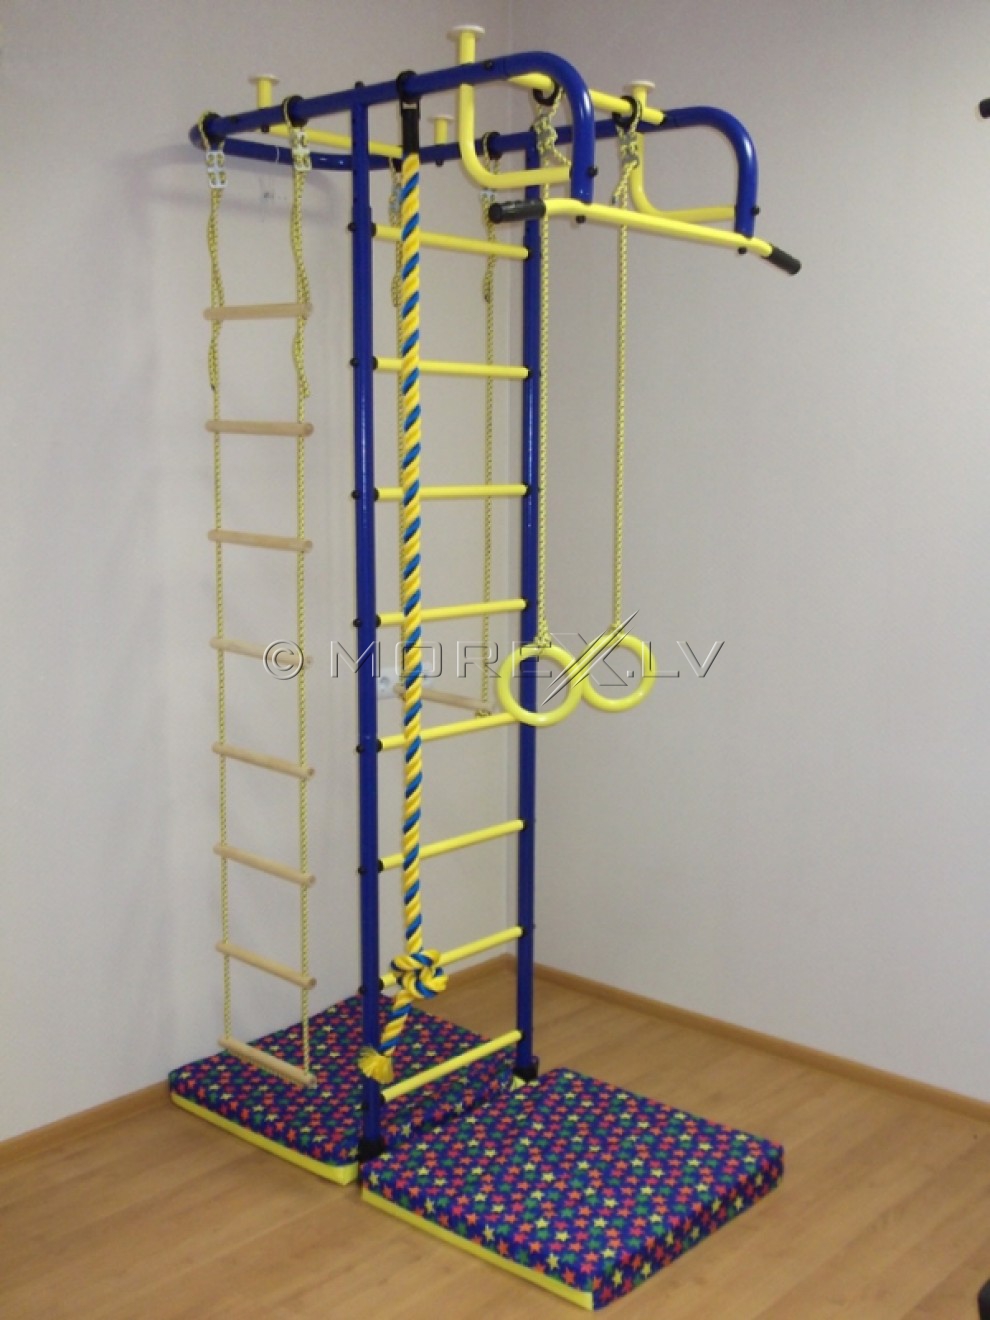 Bērnu sporta komplekss Pioner-A zili-dzeltens (zviedru siena)